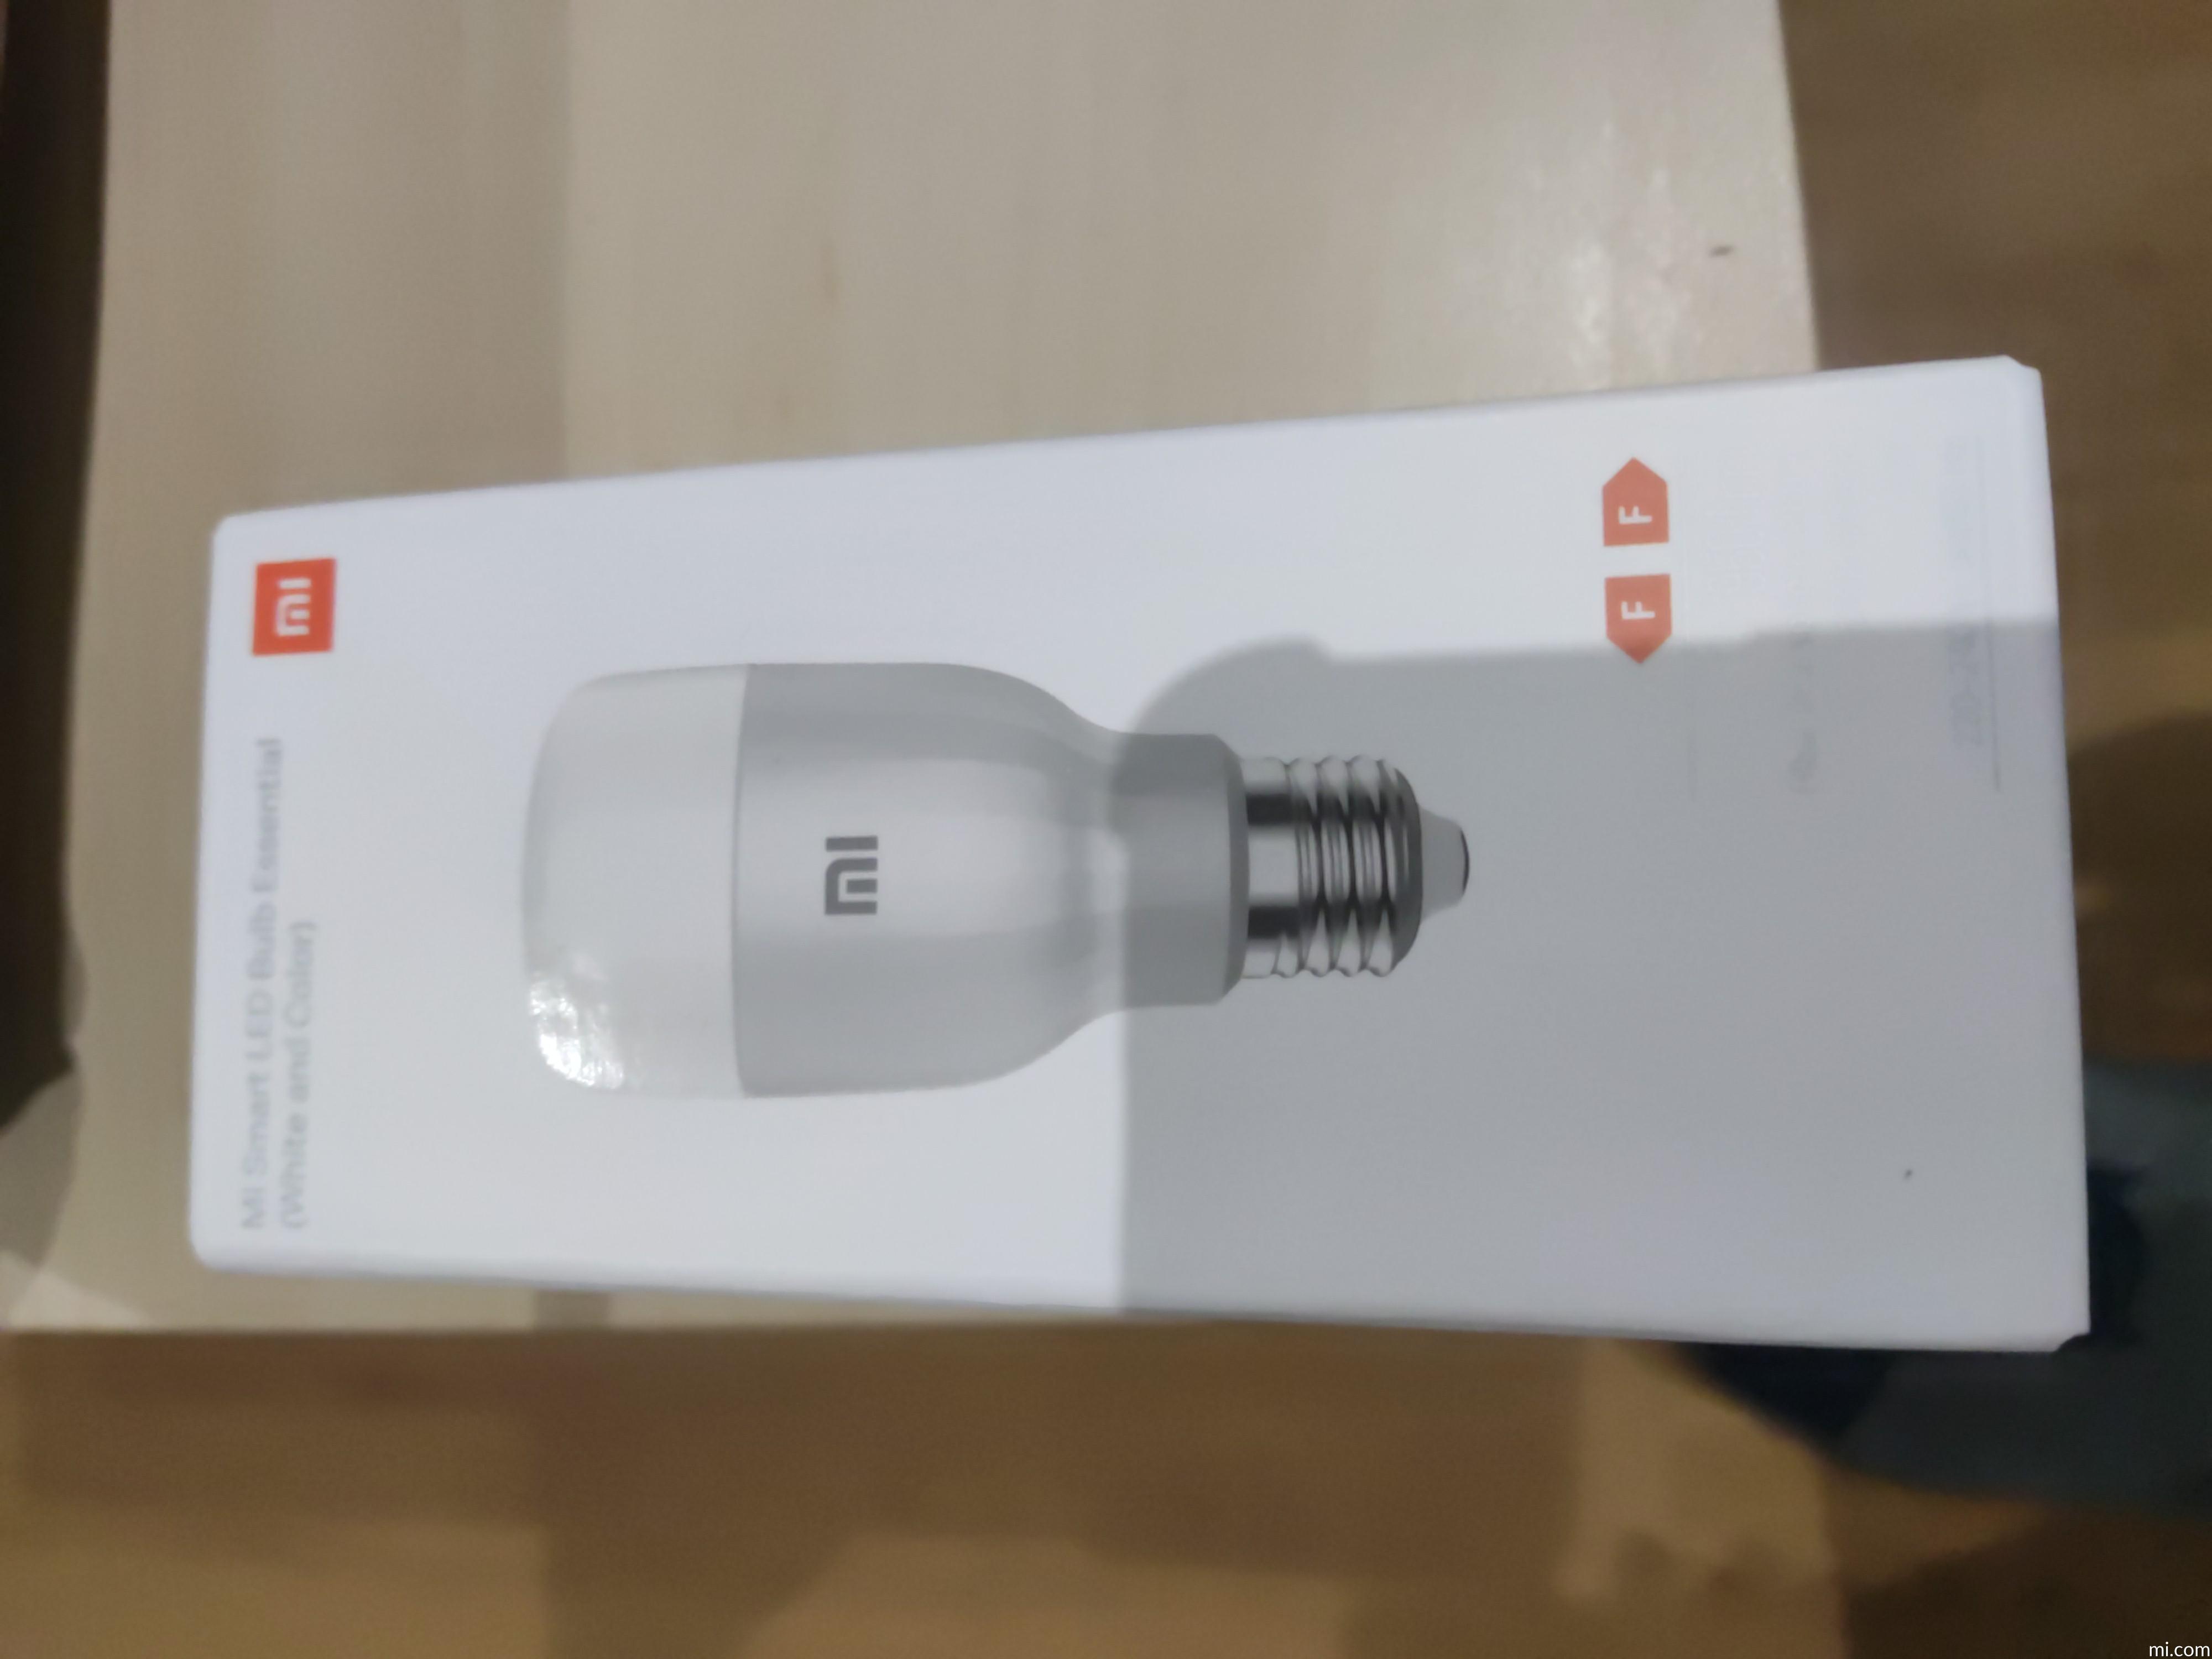 Comprar Bombilla Inteligente Xiaomi Mi LED Smart Bulb (Pack 2)